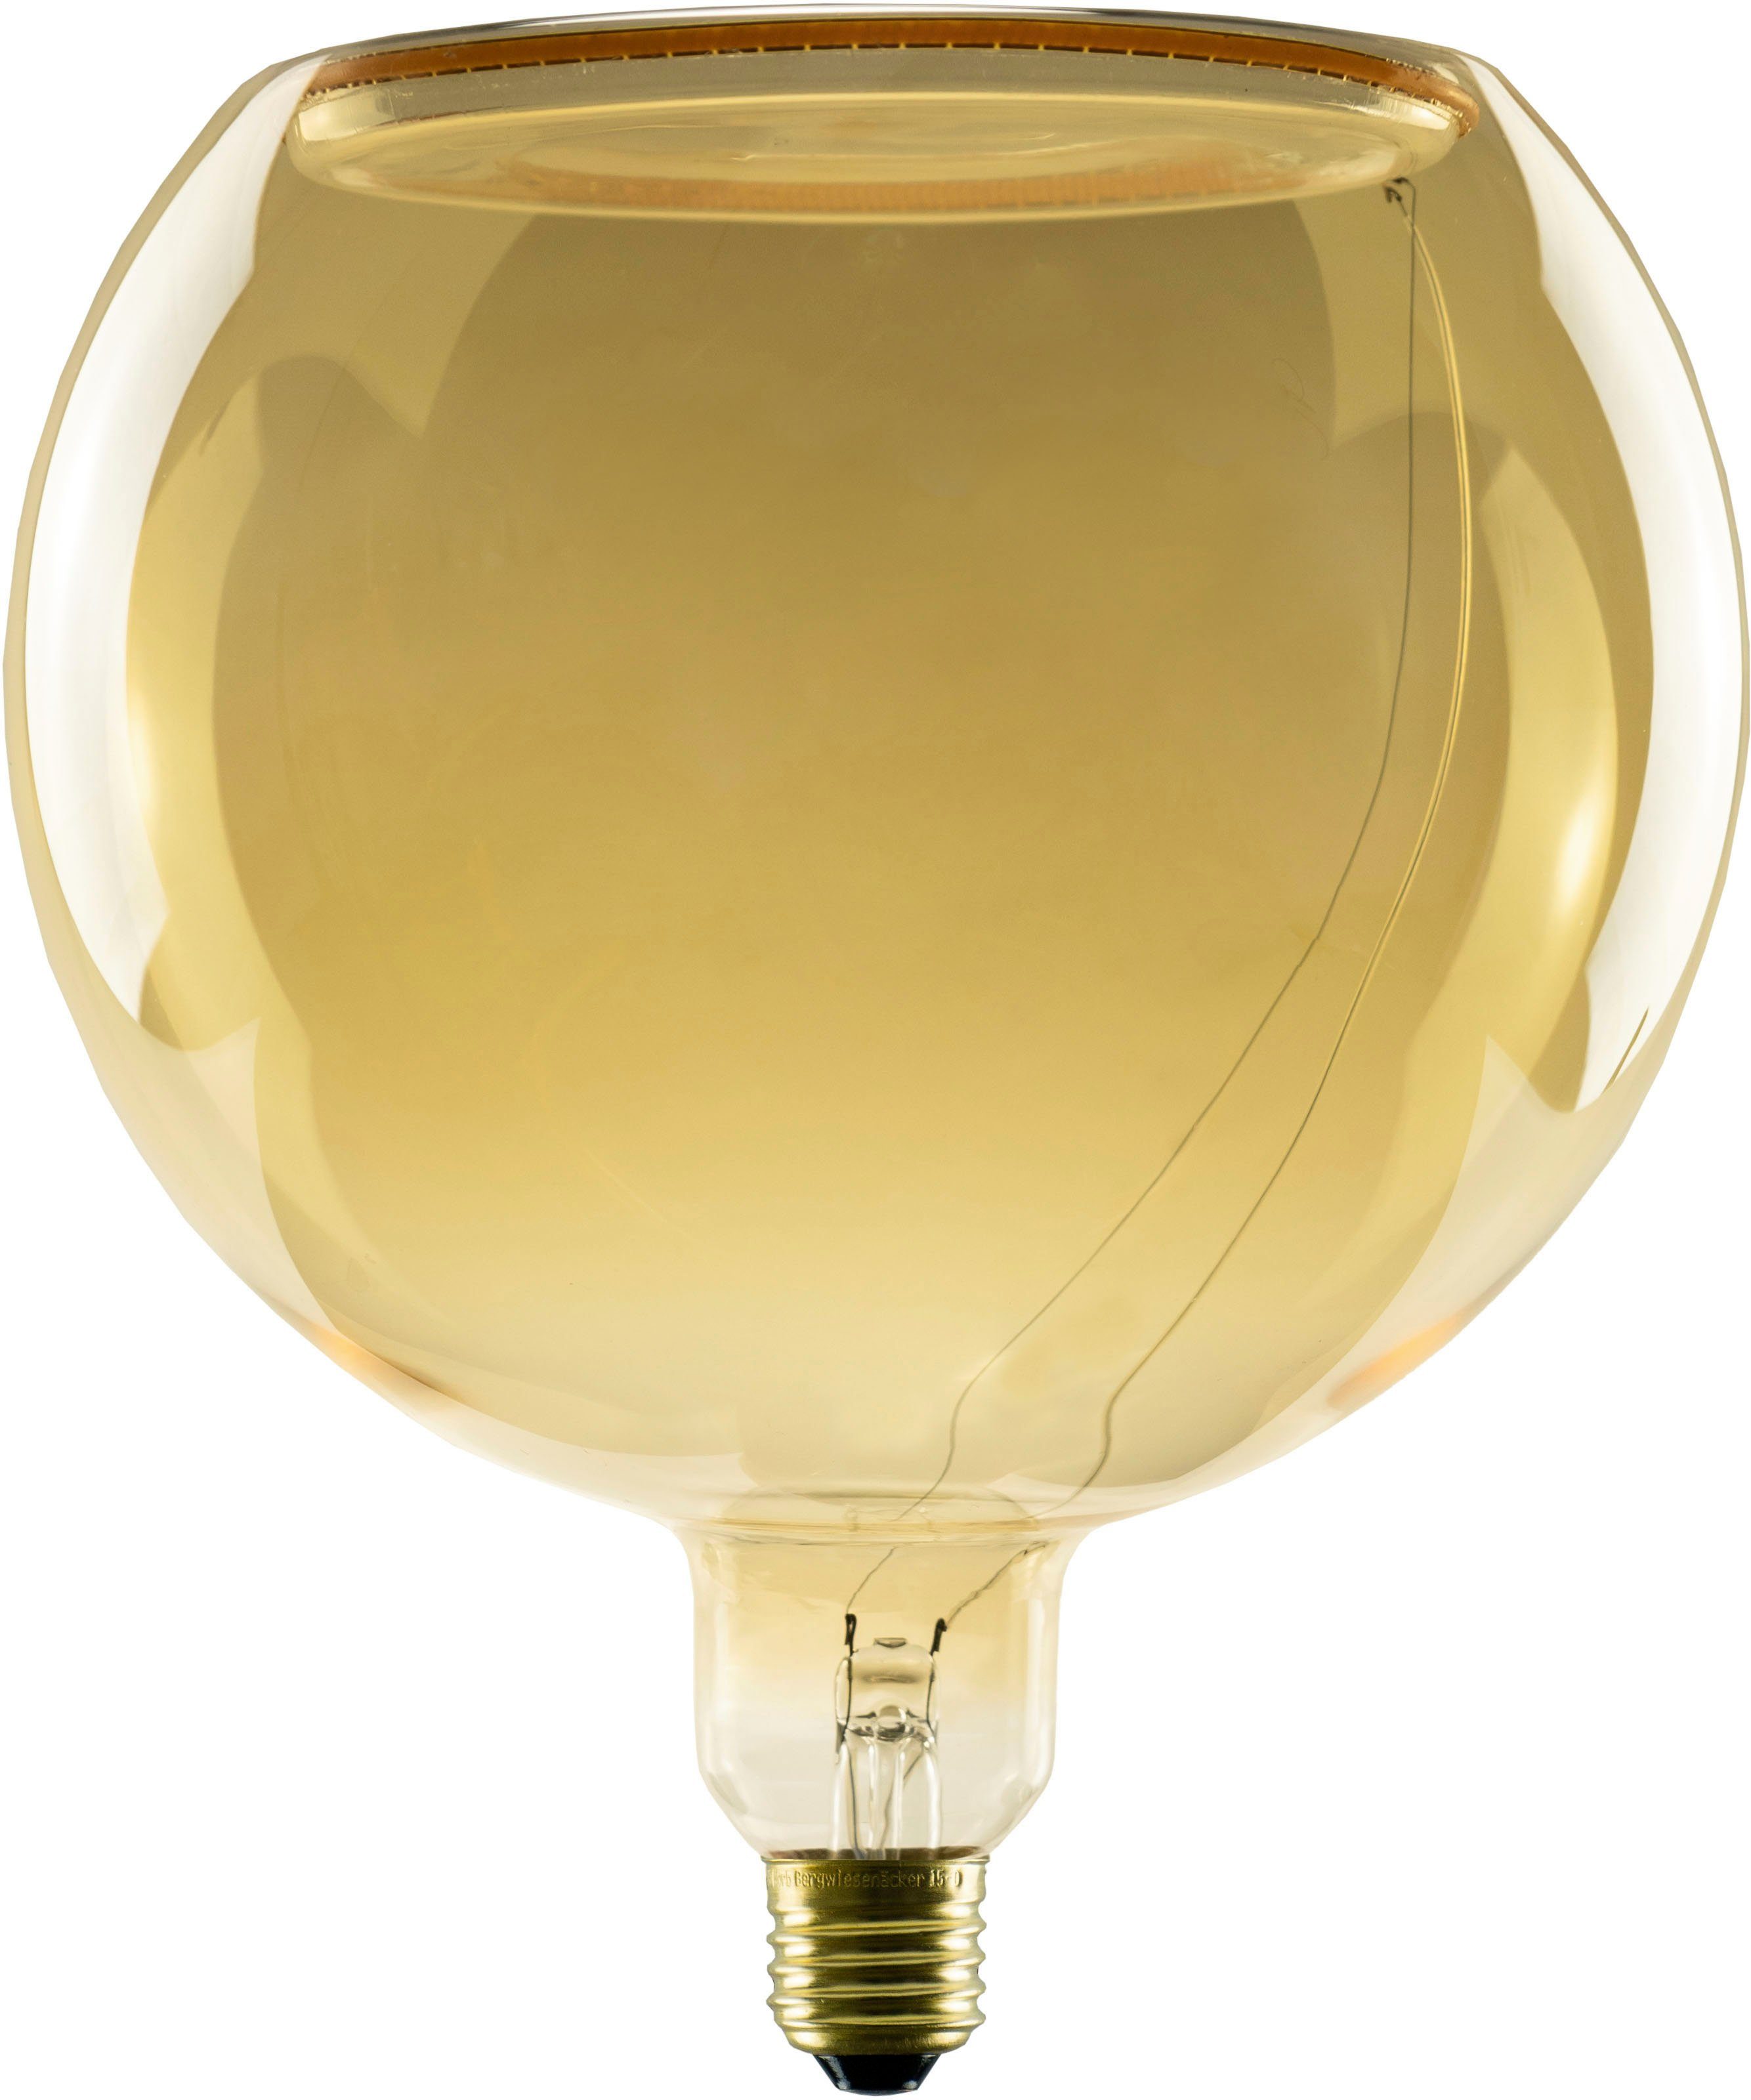 SEGULA LED-Leuchtmittel LED Floating Extra-Warmweiß, CRI E27, St., 200 1 90, Globe 200 E27, dimmbar, LED gold, Globe Aussenbereich 4,5W, Floating gold